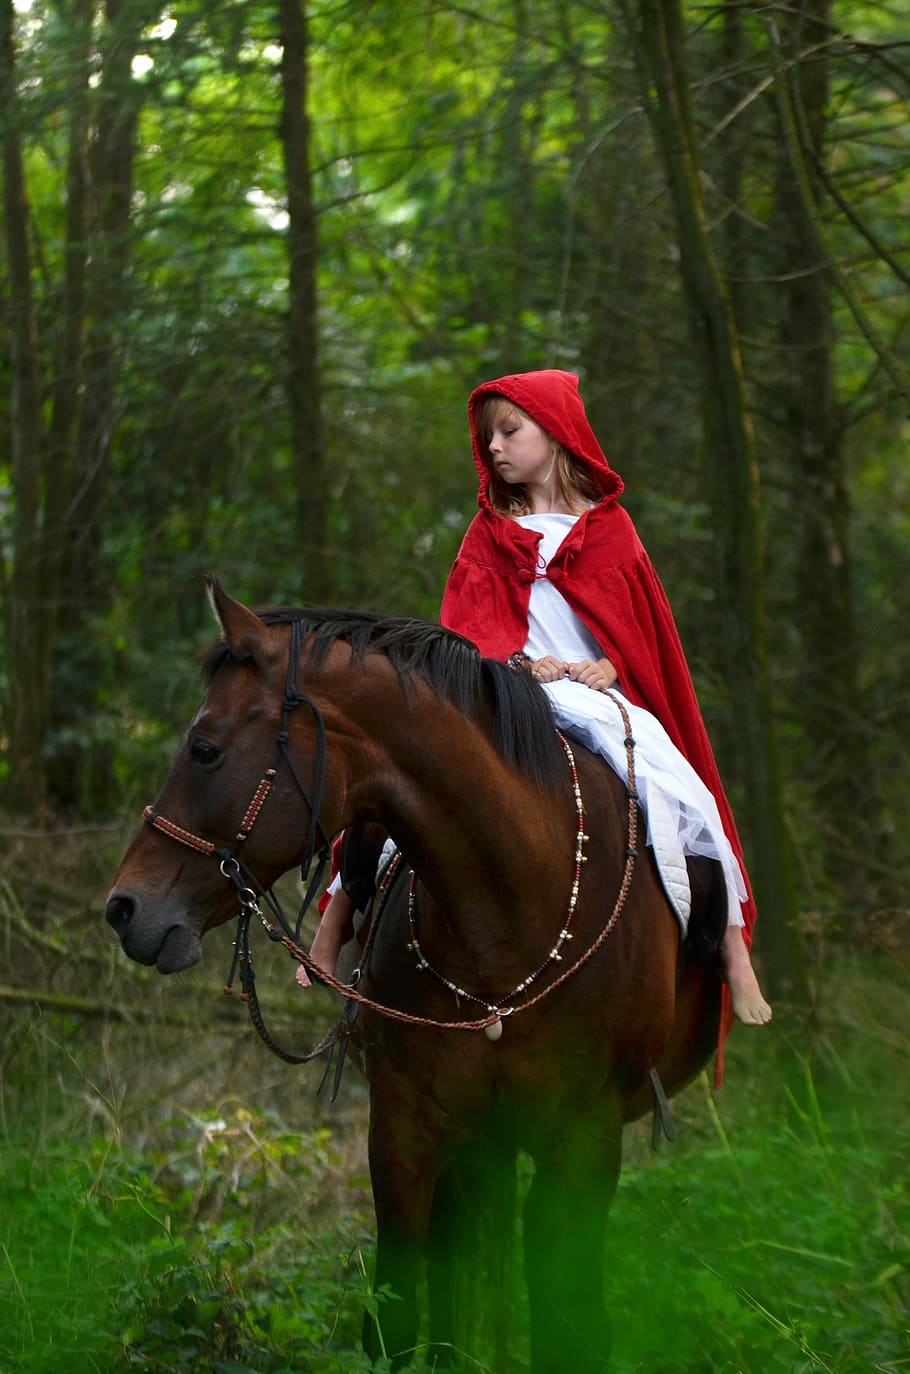 kuda, hutan, kerudung merah, anak berkerudung merah, dongeng, pendongeng, fantasi, alam, gadis, petualangan